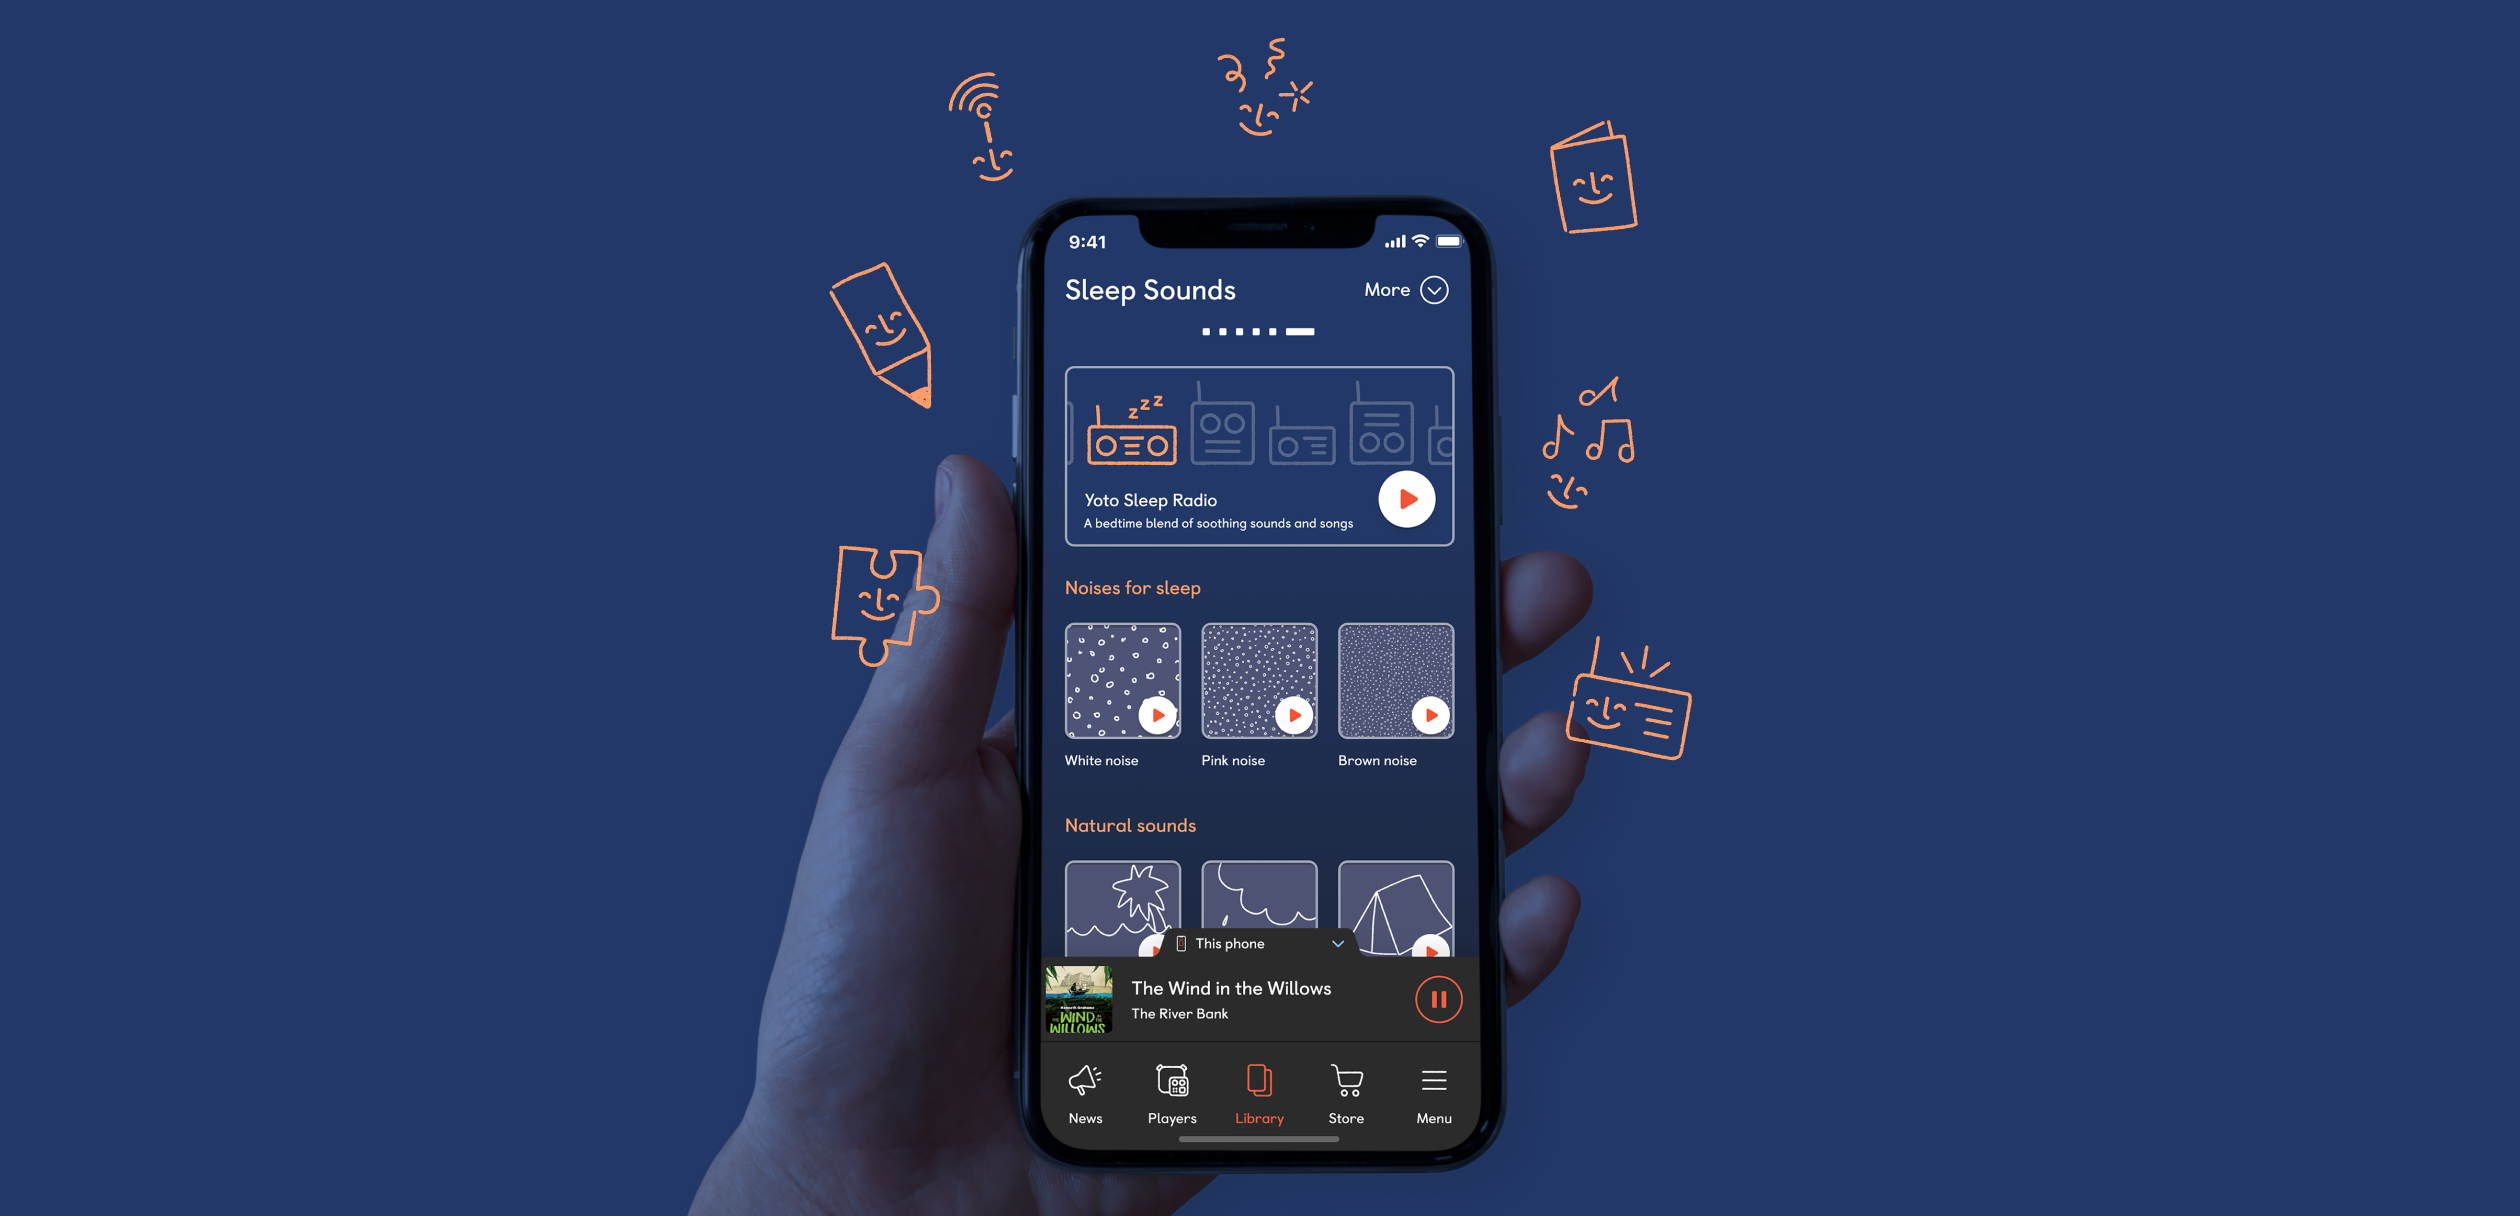 Sleep Sounds in the Yoto App